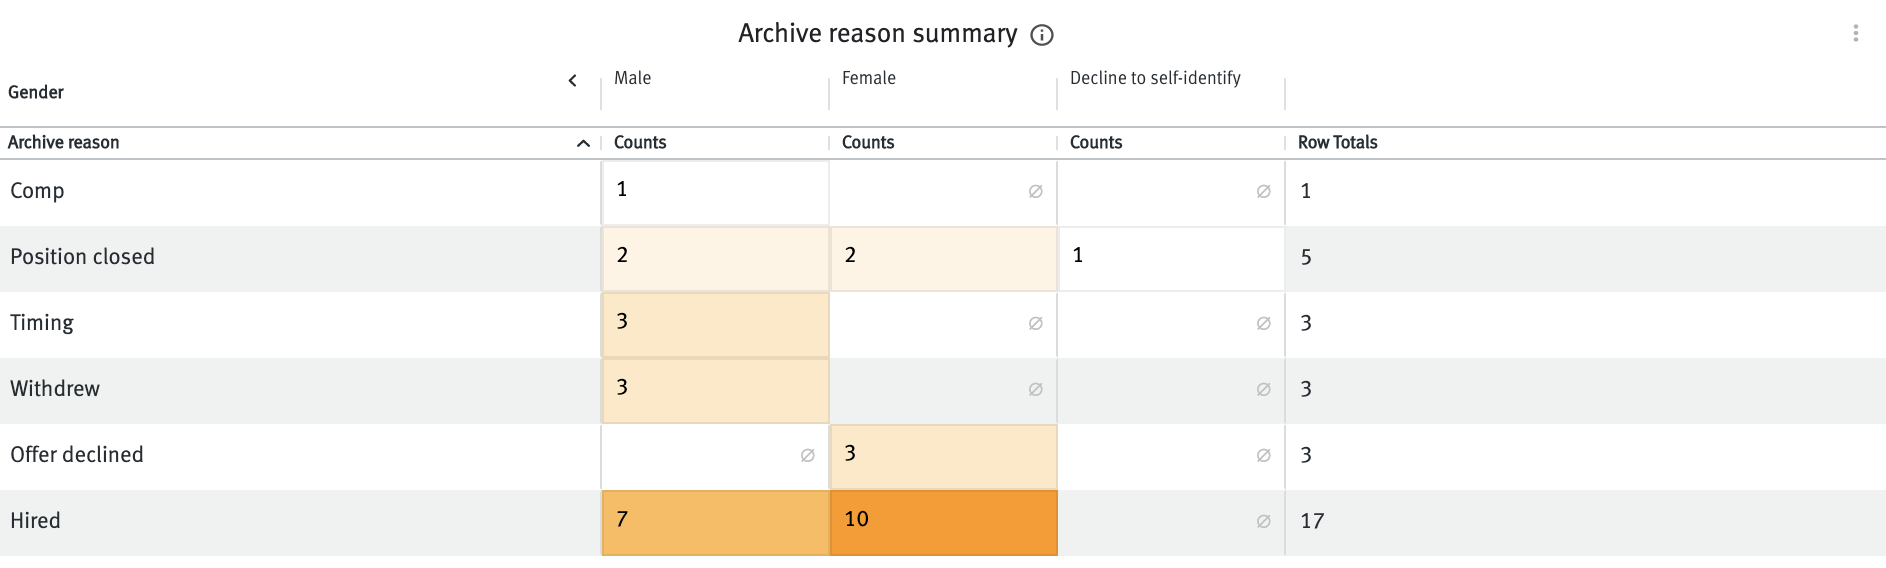 Archive reason summary table